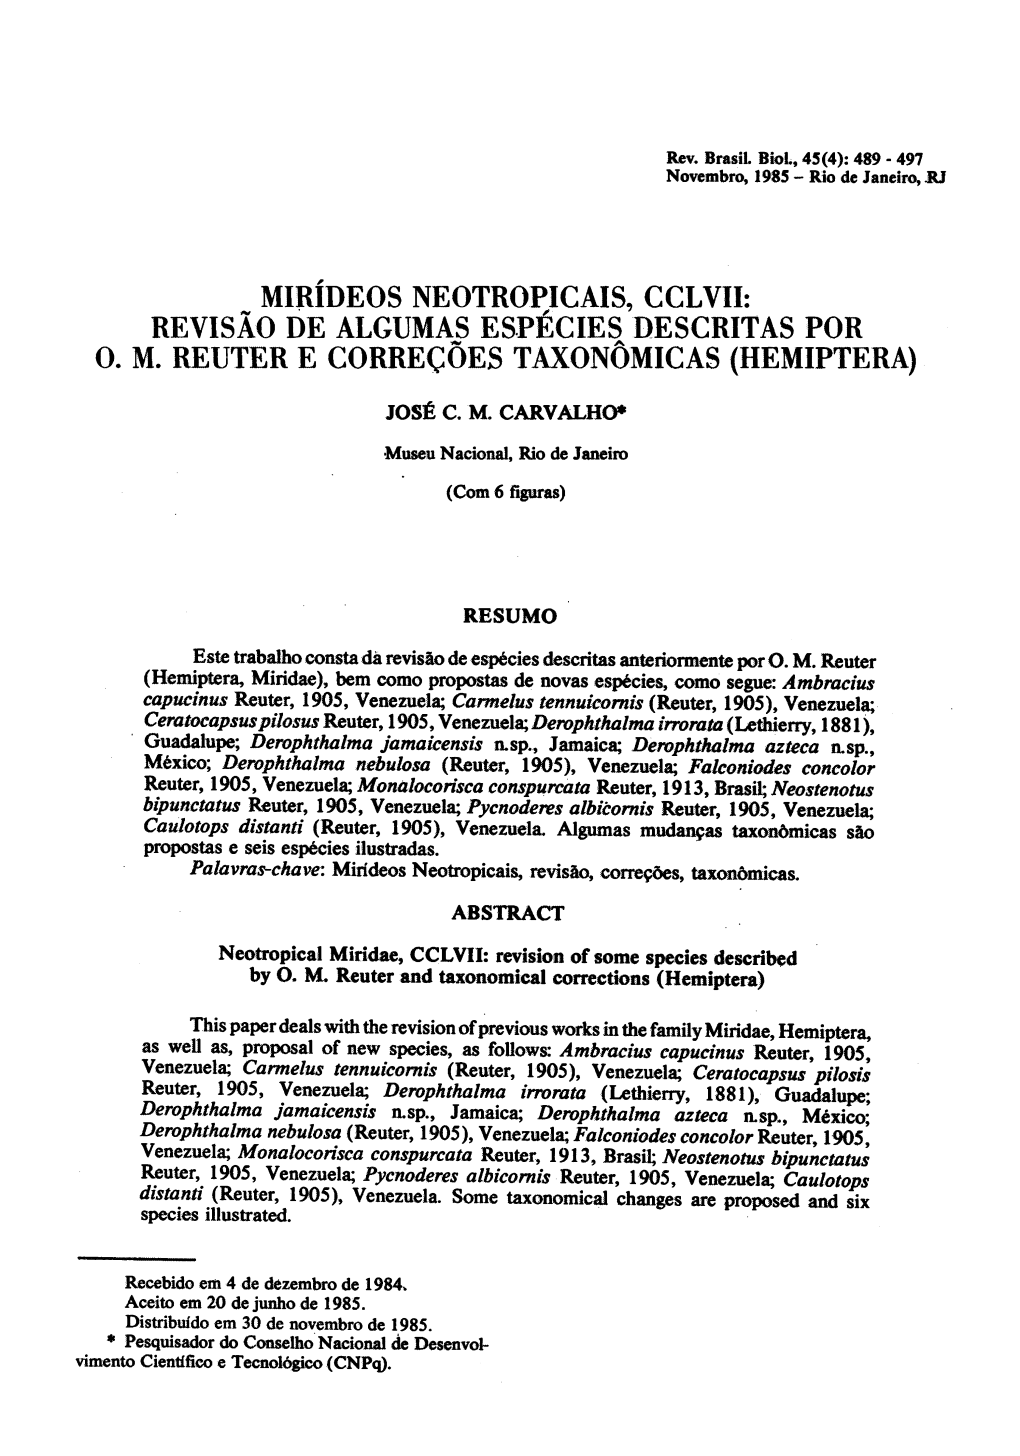 Mirideos Neotropicais, Cclvii: Revisao De Algumas Especies Descritas Por 0